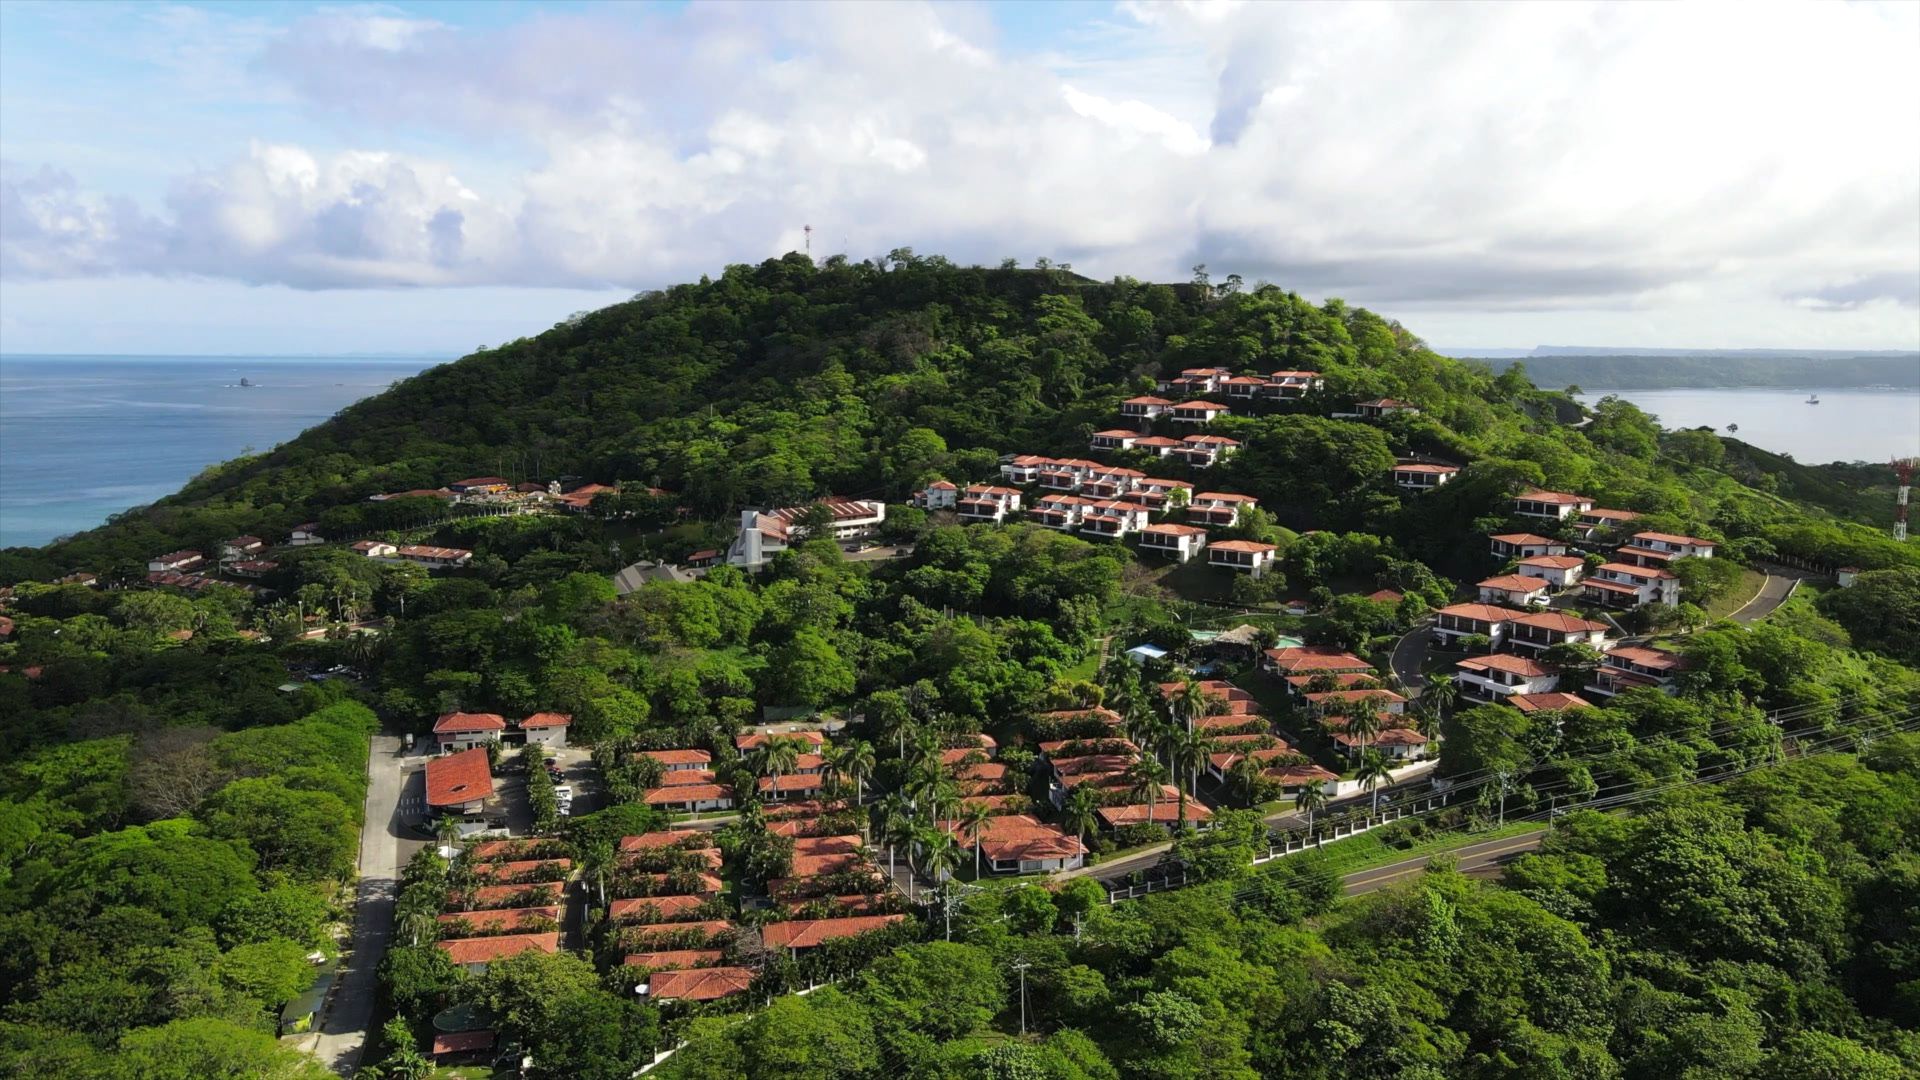 Hillside condo community with an HOA in Costa Rica